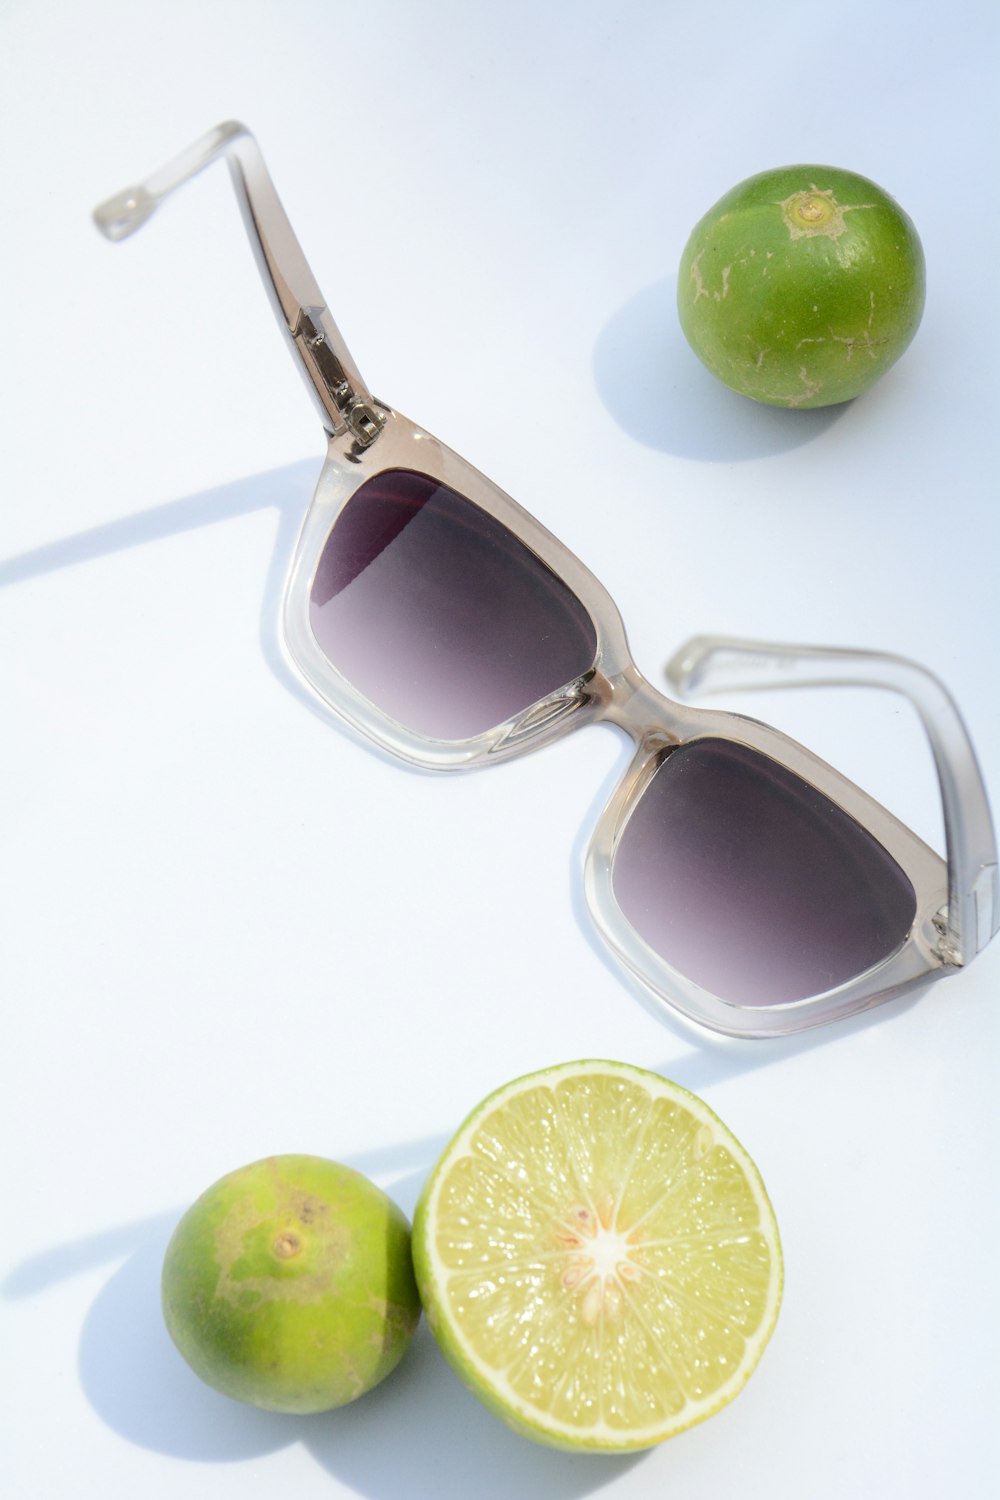 Fotografia piatta di occhiali da sole e frutta calamondin a fette